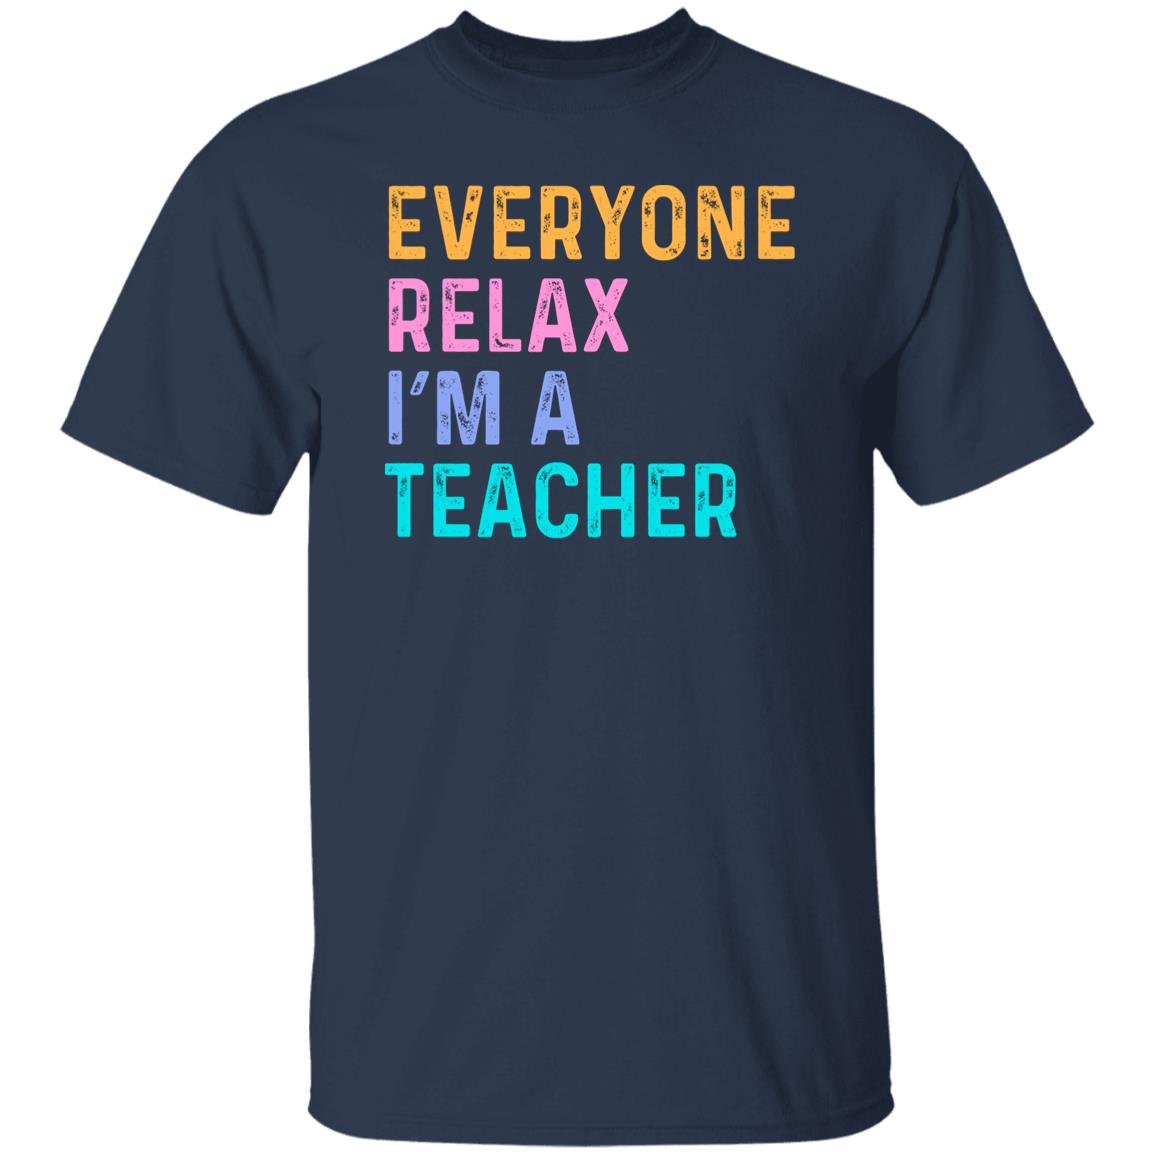 Funny Teacher T-Shirt Everyone relax I'm a teacher Unisex tee Black Navy Dark Heather-Family-Gift-Planet